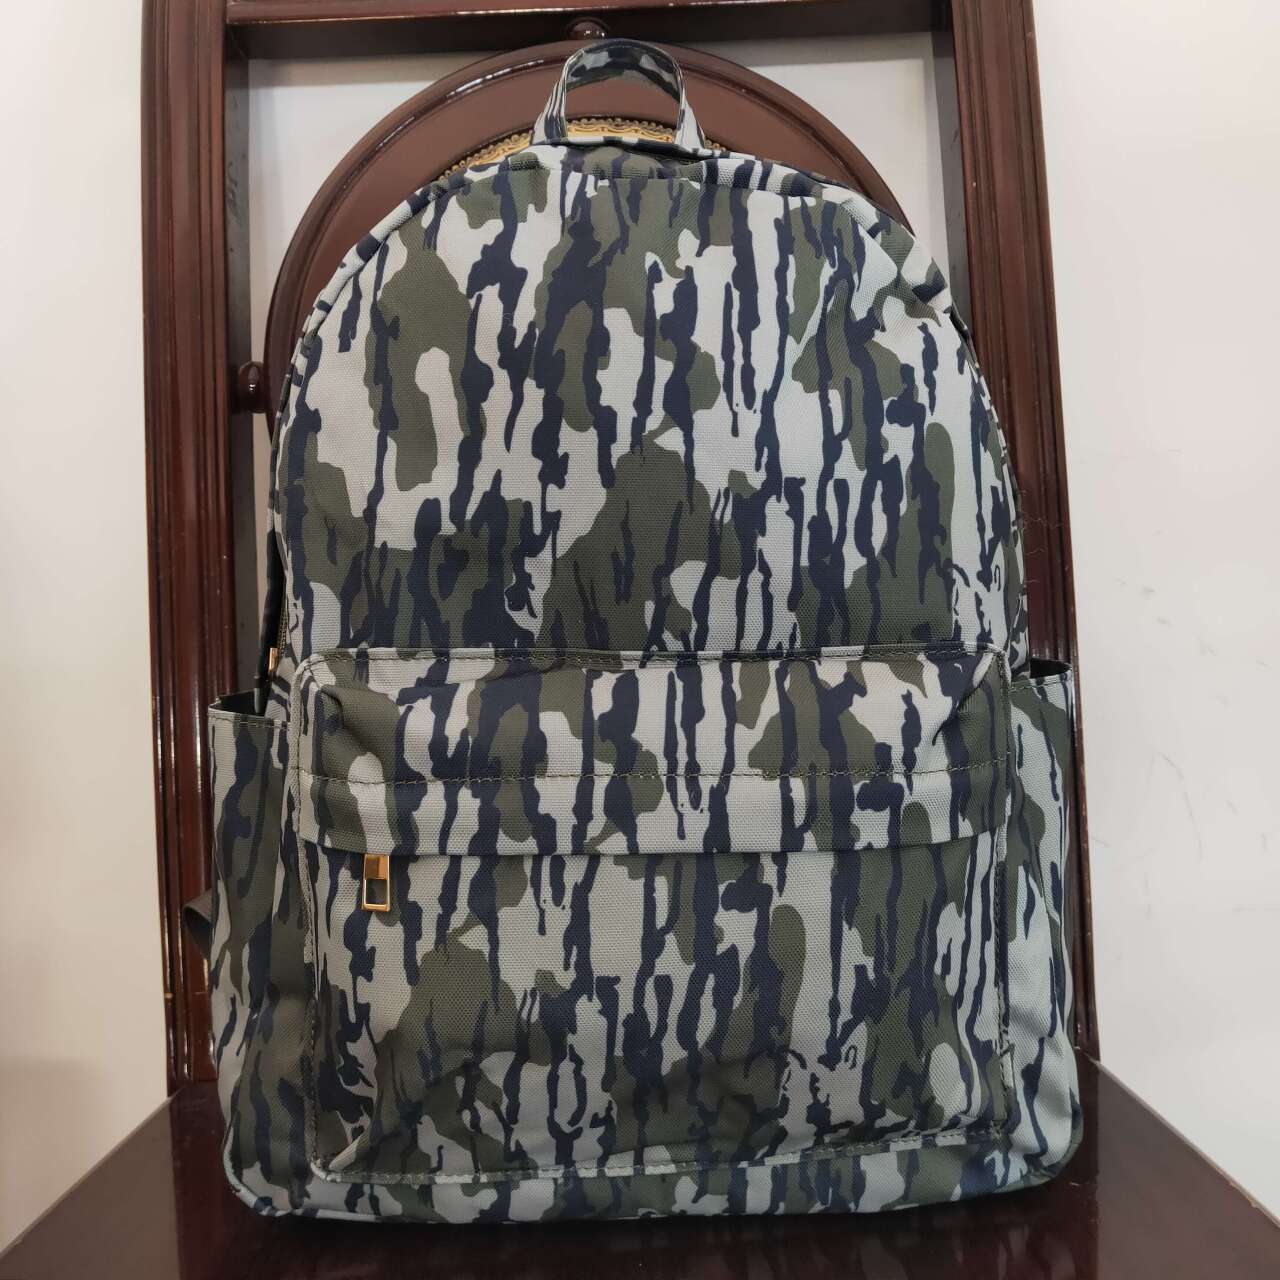 BA0158 Kids Baby Camo Backpack School Bag